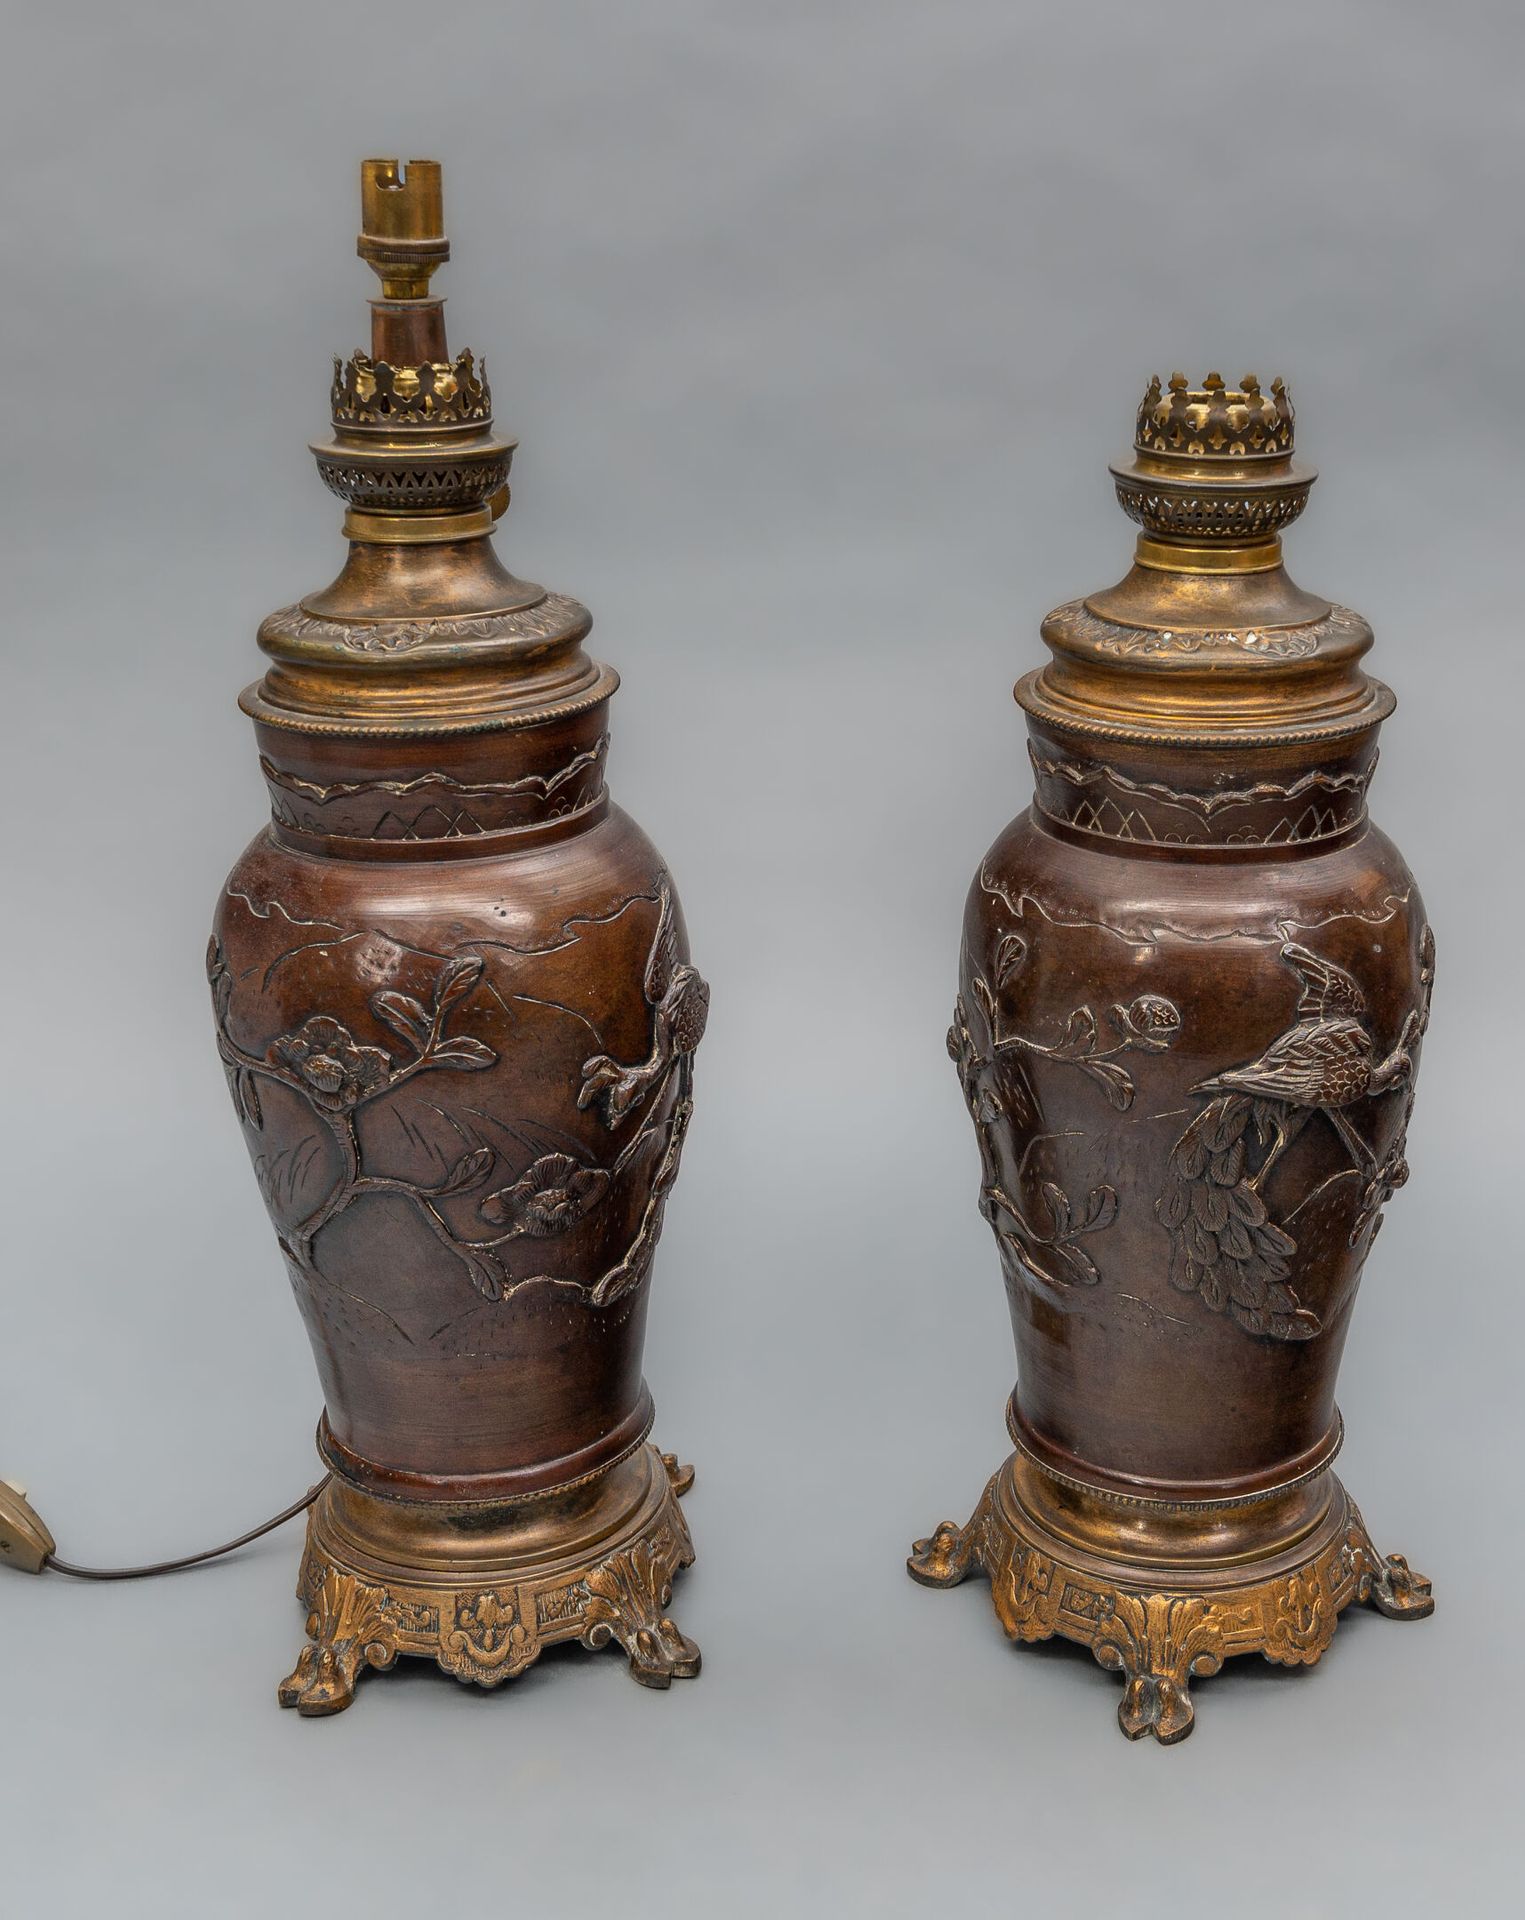 Null 一对青铜花瓶，日本，明治时期（1868-1912 年）
浮雕孔雀和牡丹装饰，安装为灯具
H.32 厘米（不含框架）--总高 42.5 厘米